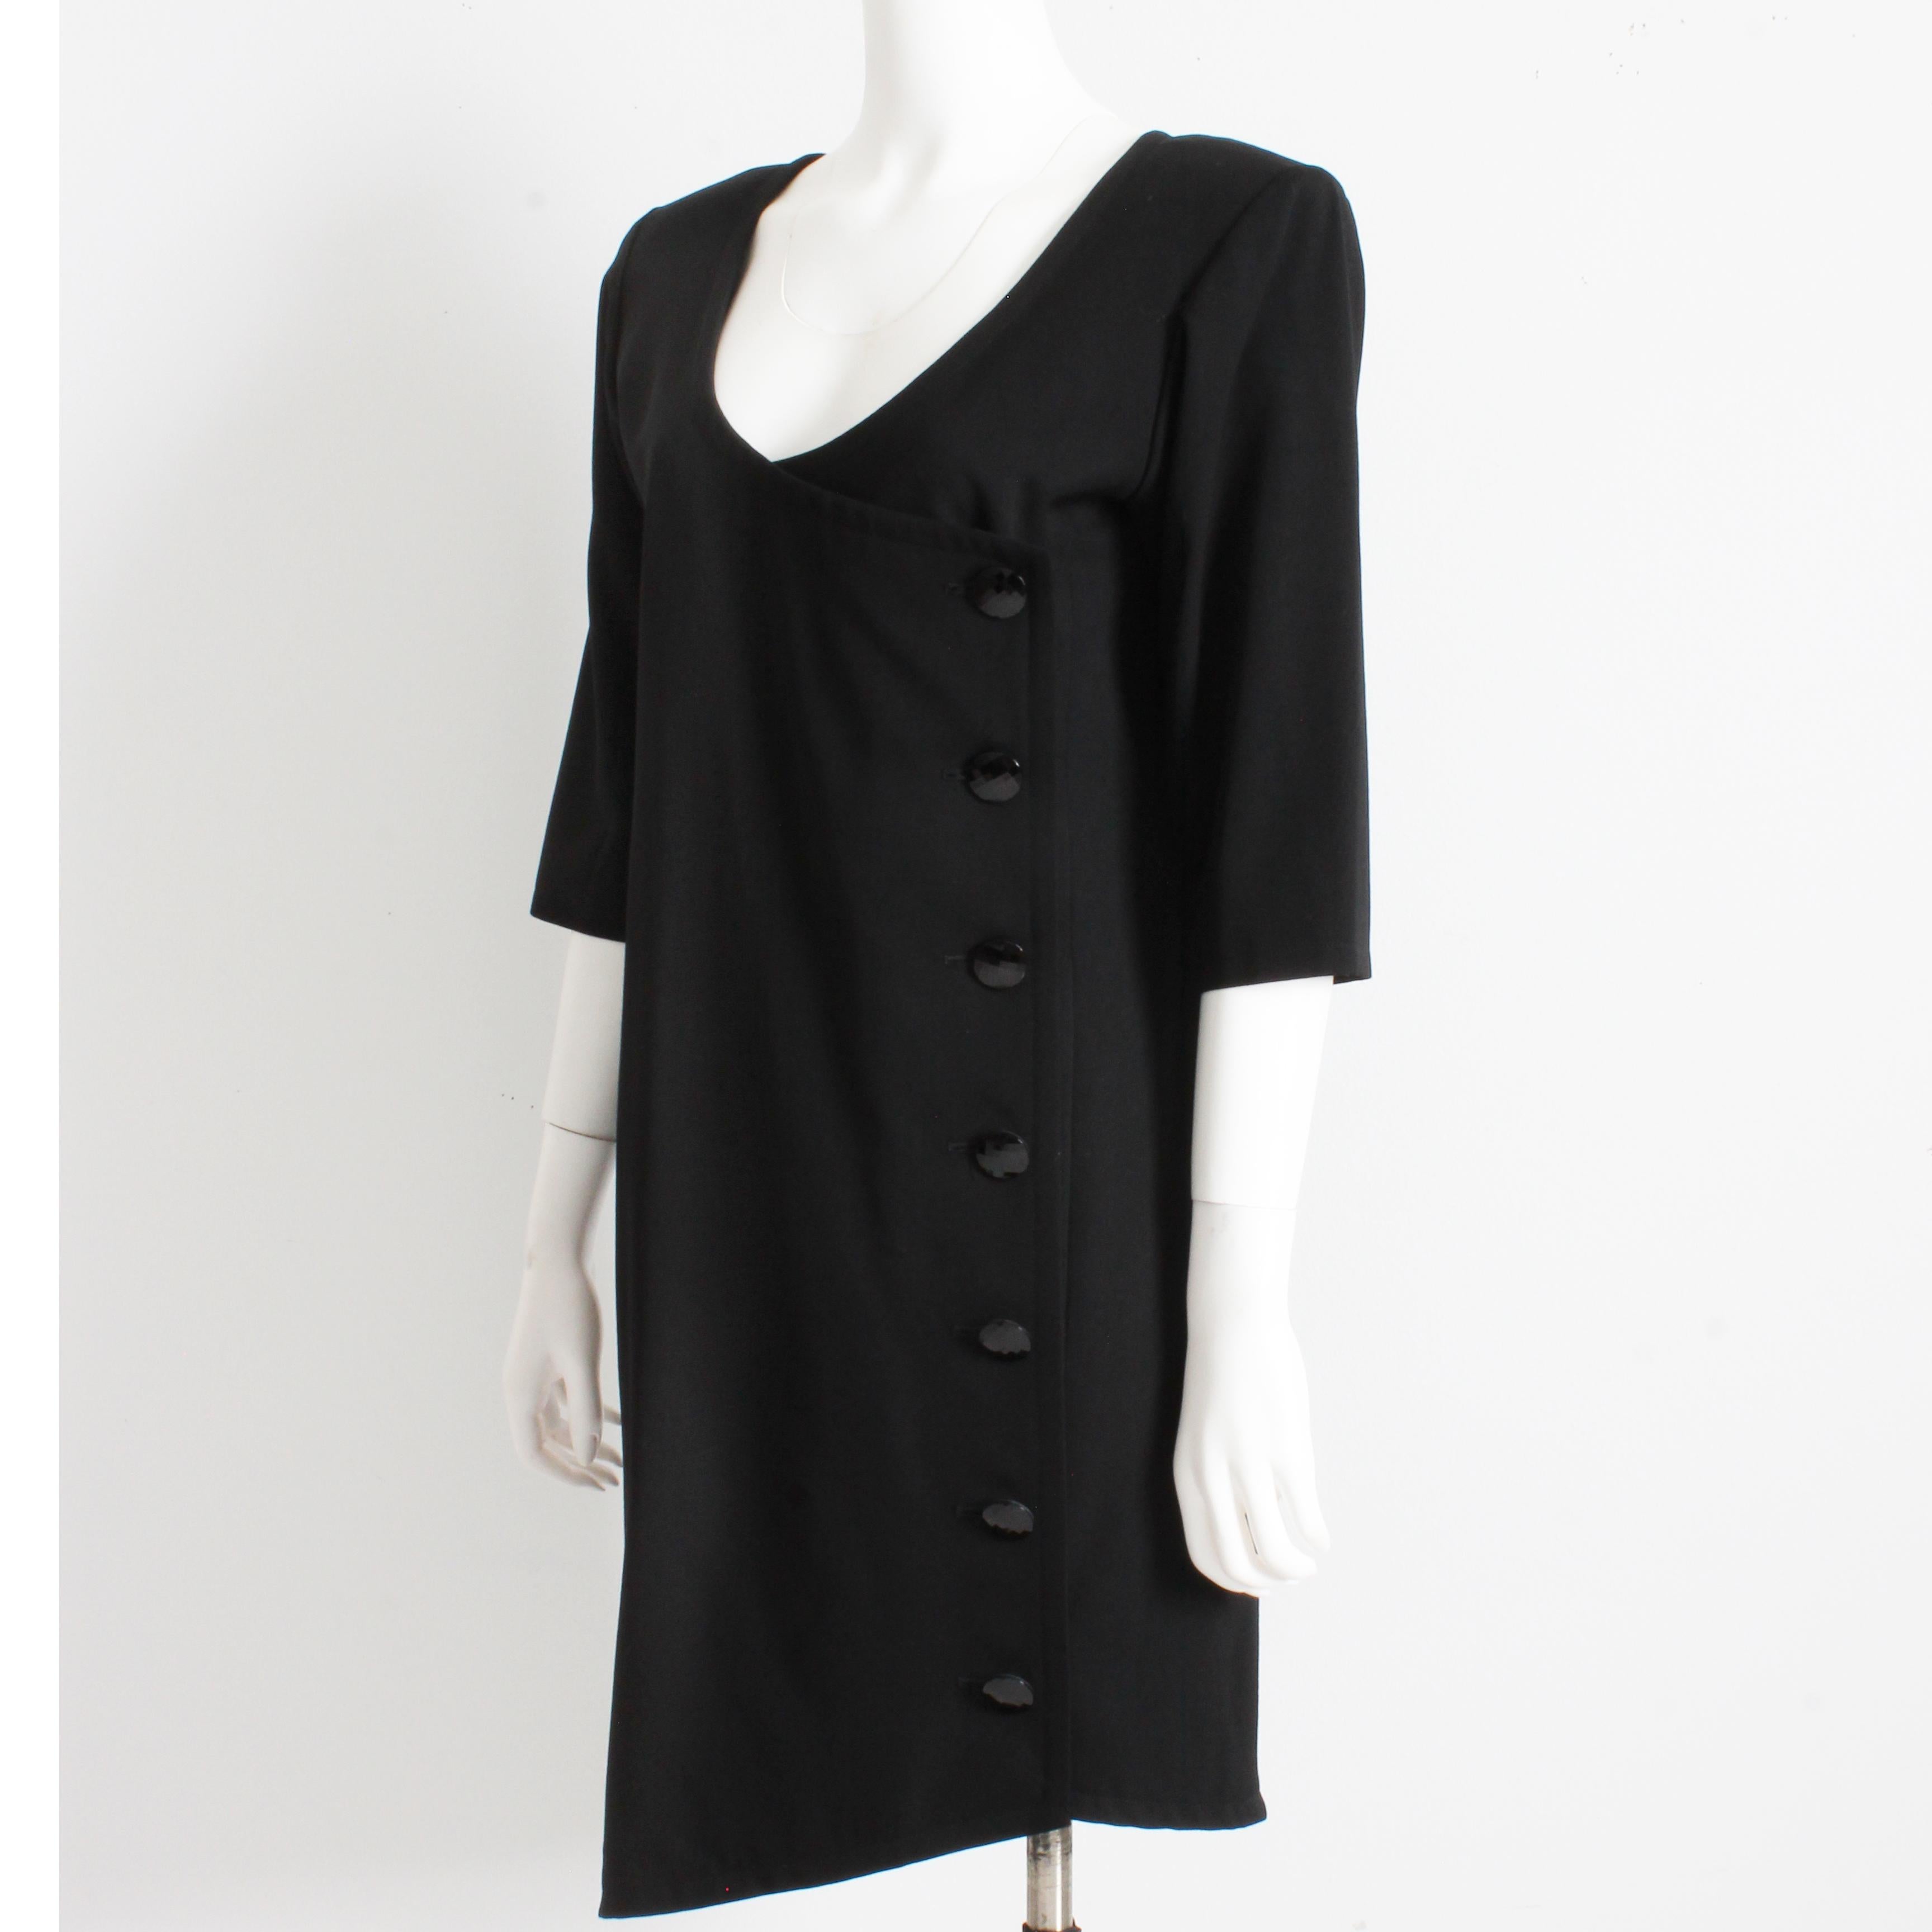 Yves Saint Laurent Dress and Jacket 2pc Set Black Wool YSL Rive Gauche 90s Sz 40 For Sale 1